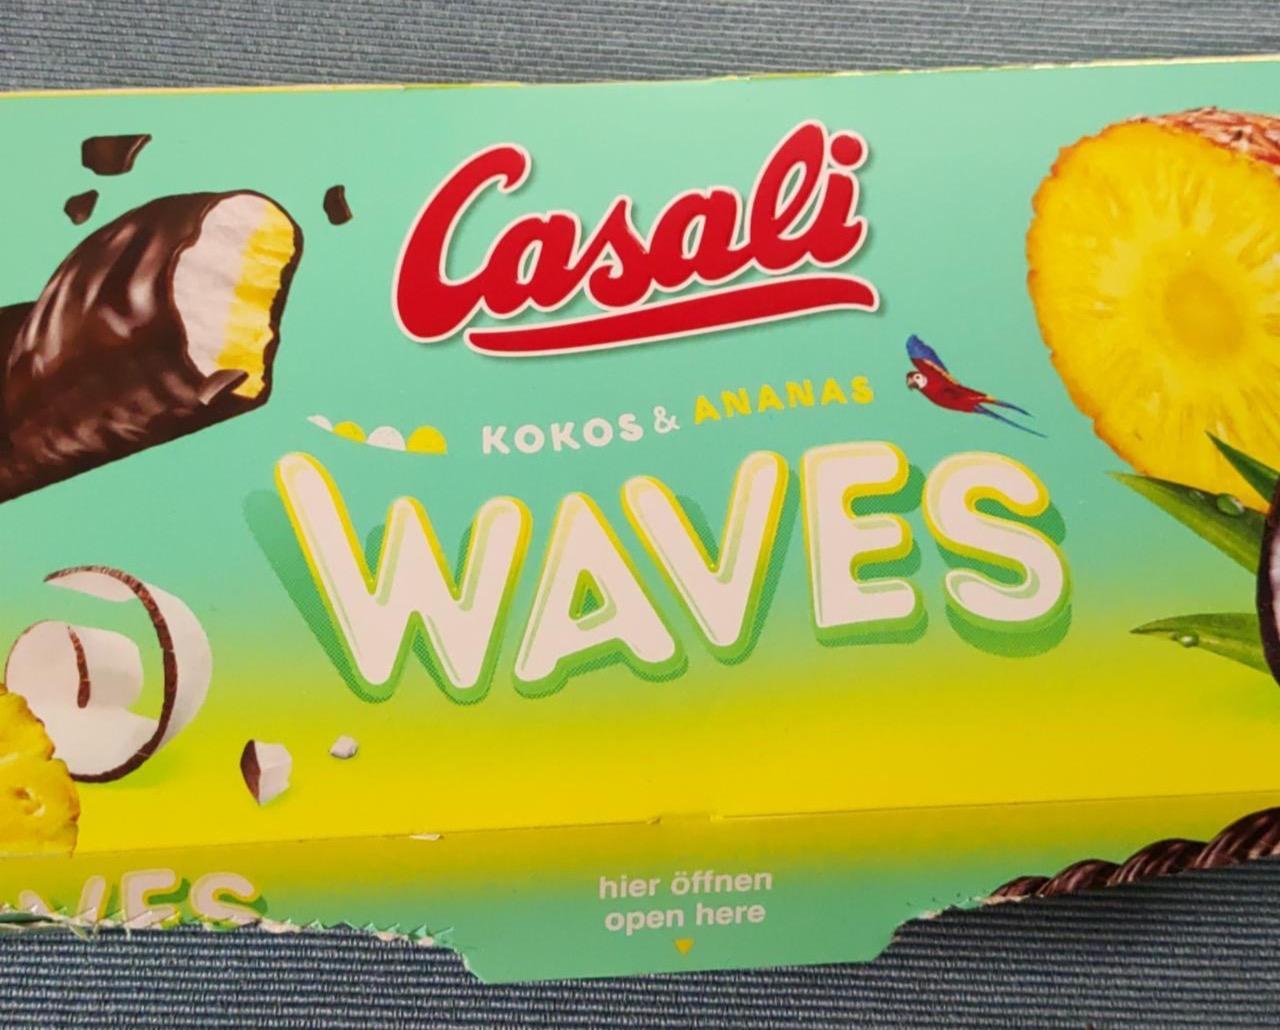 Képek - Kokos & ananas waves Casali